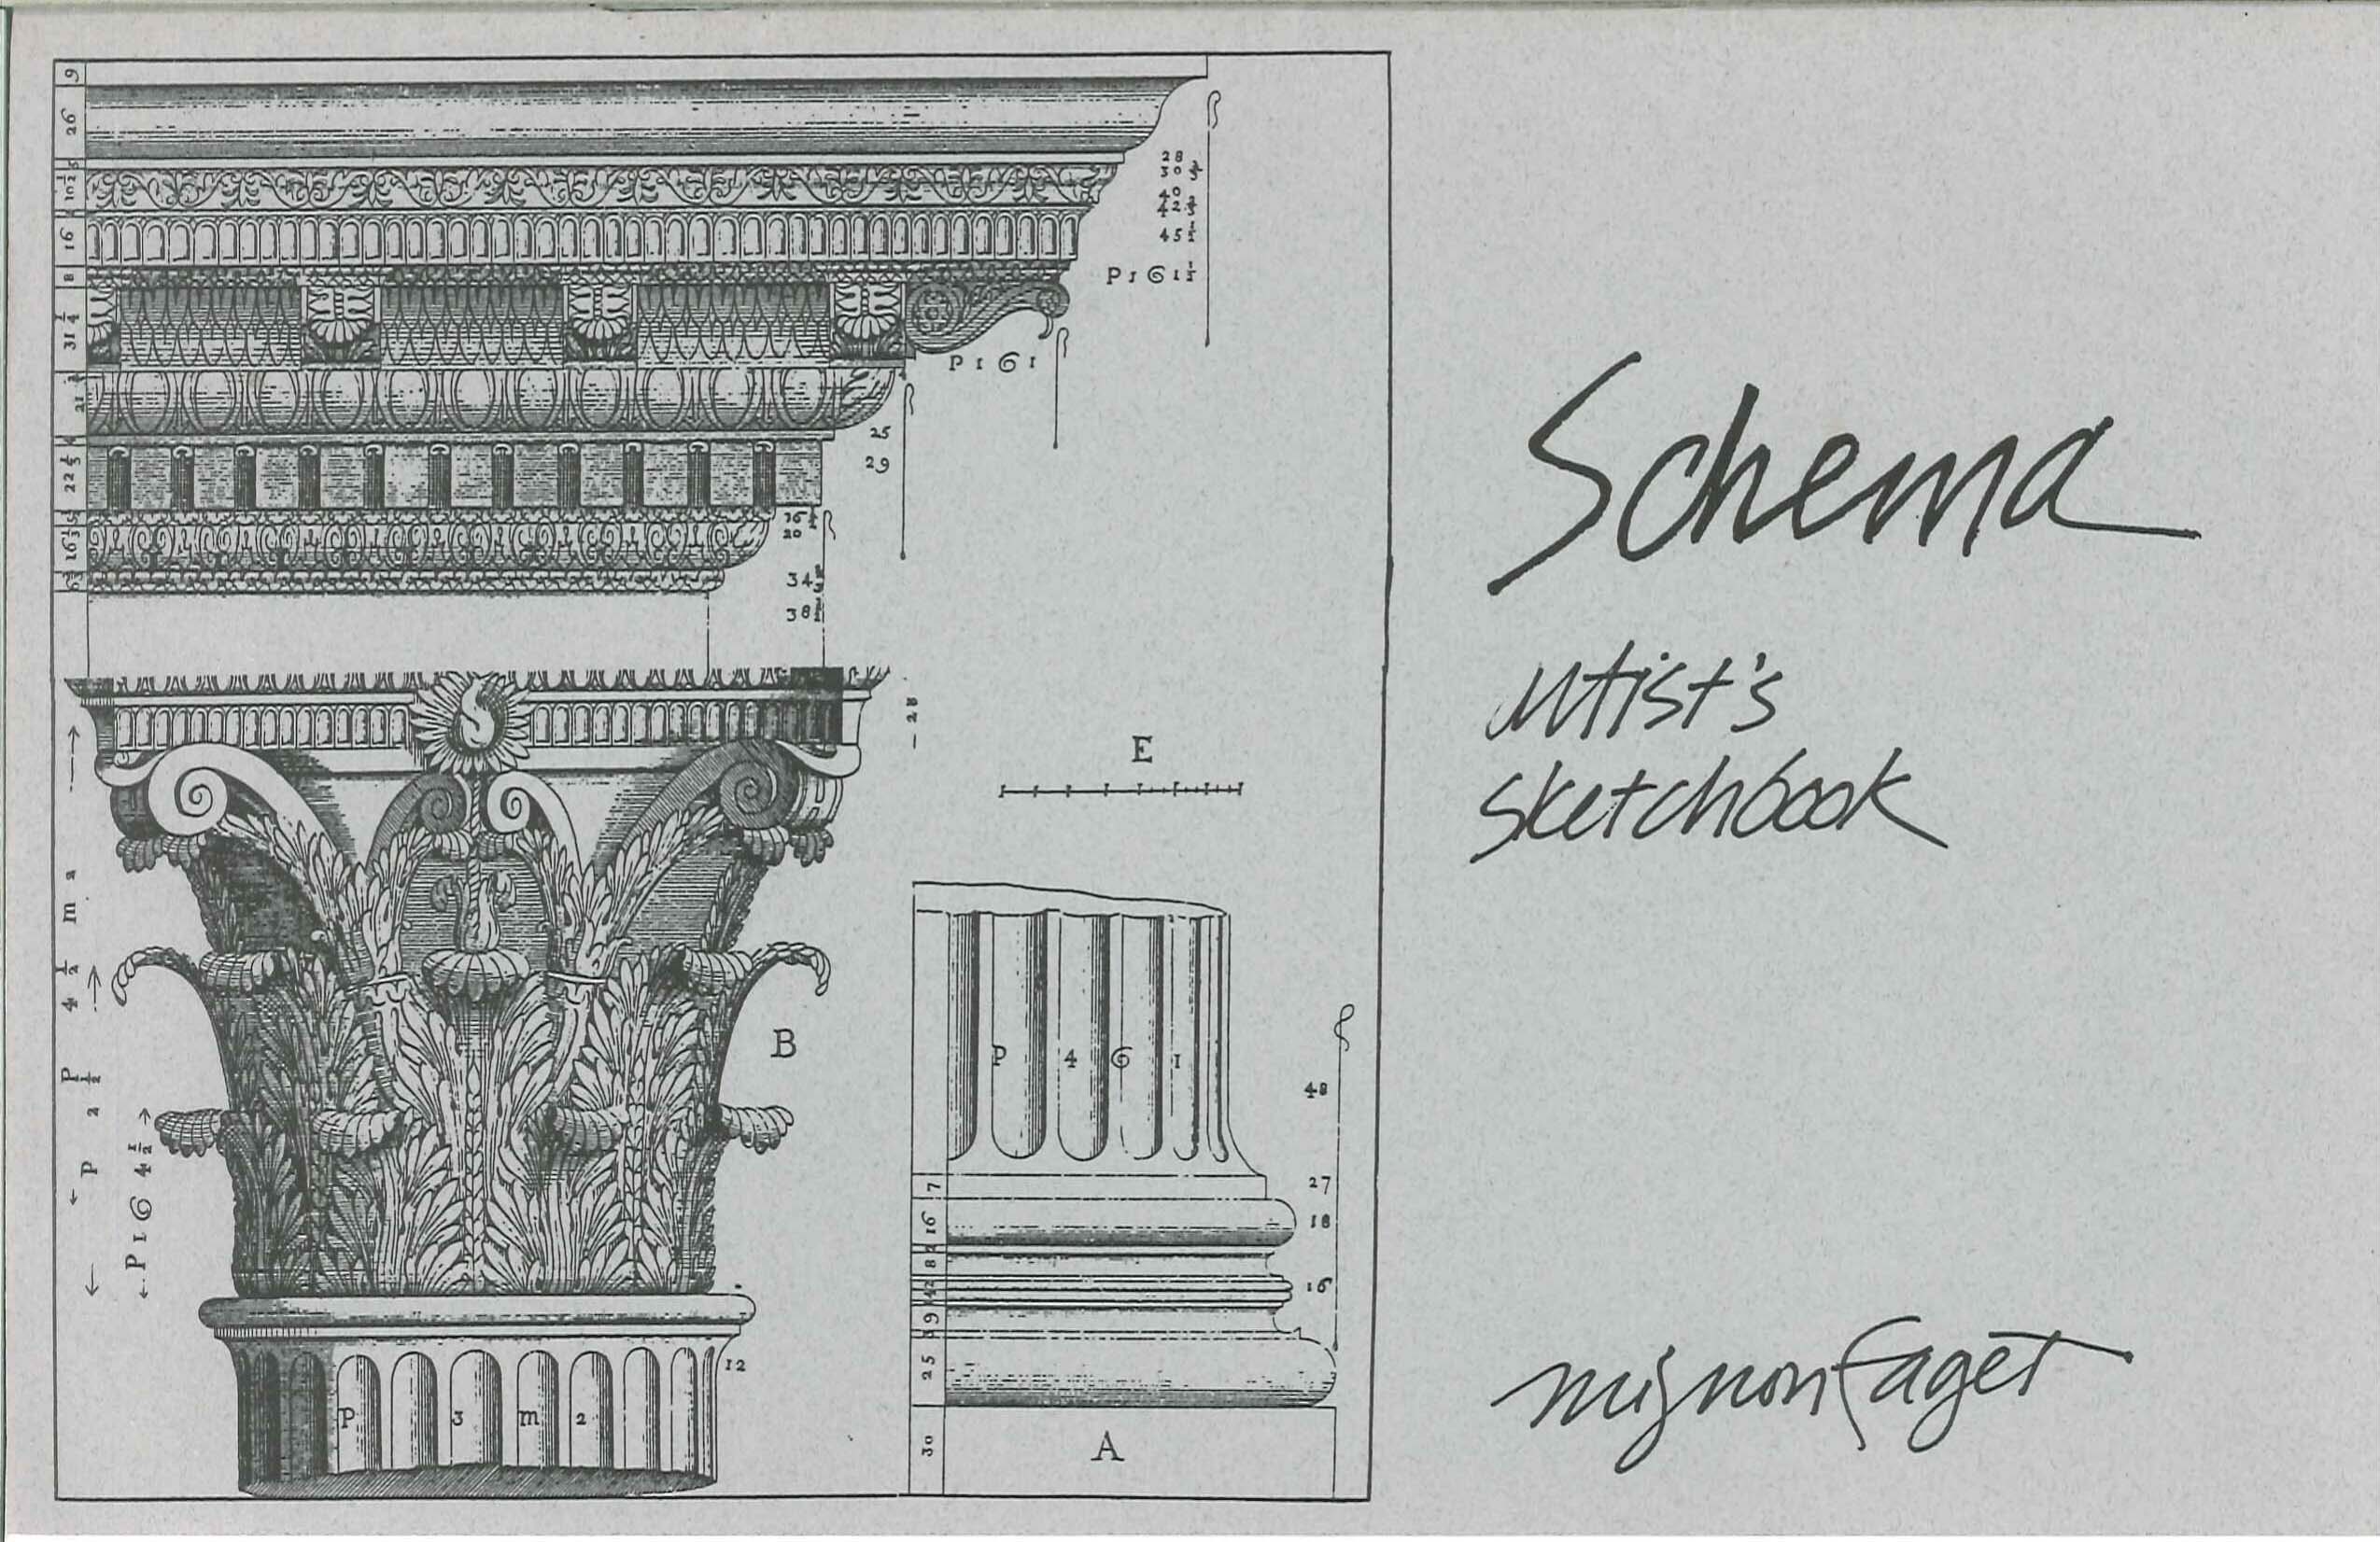 Schema Artist's Sketchbook Cover